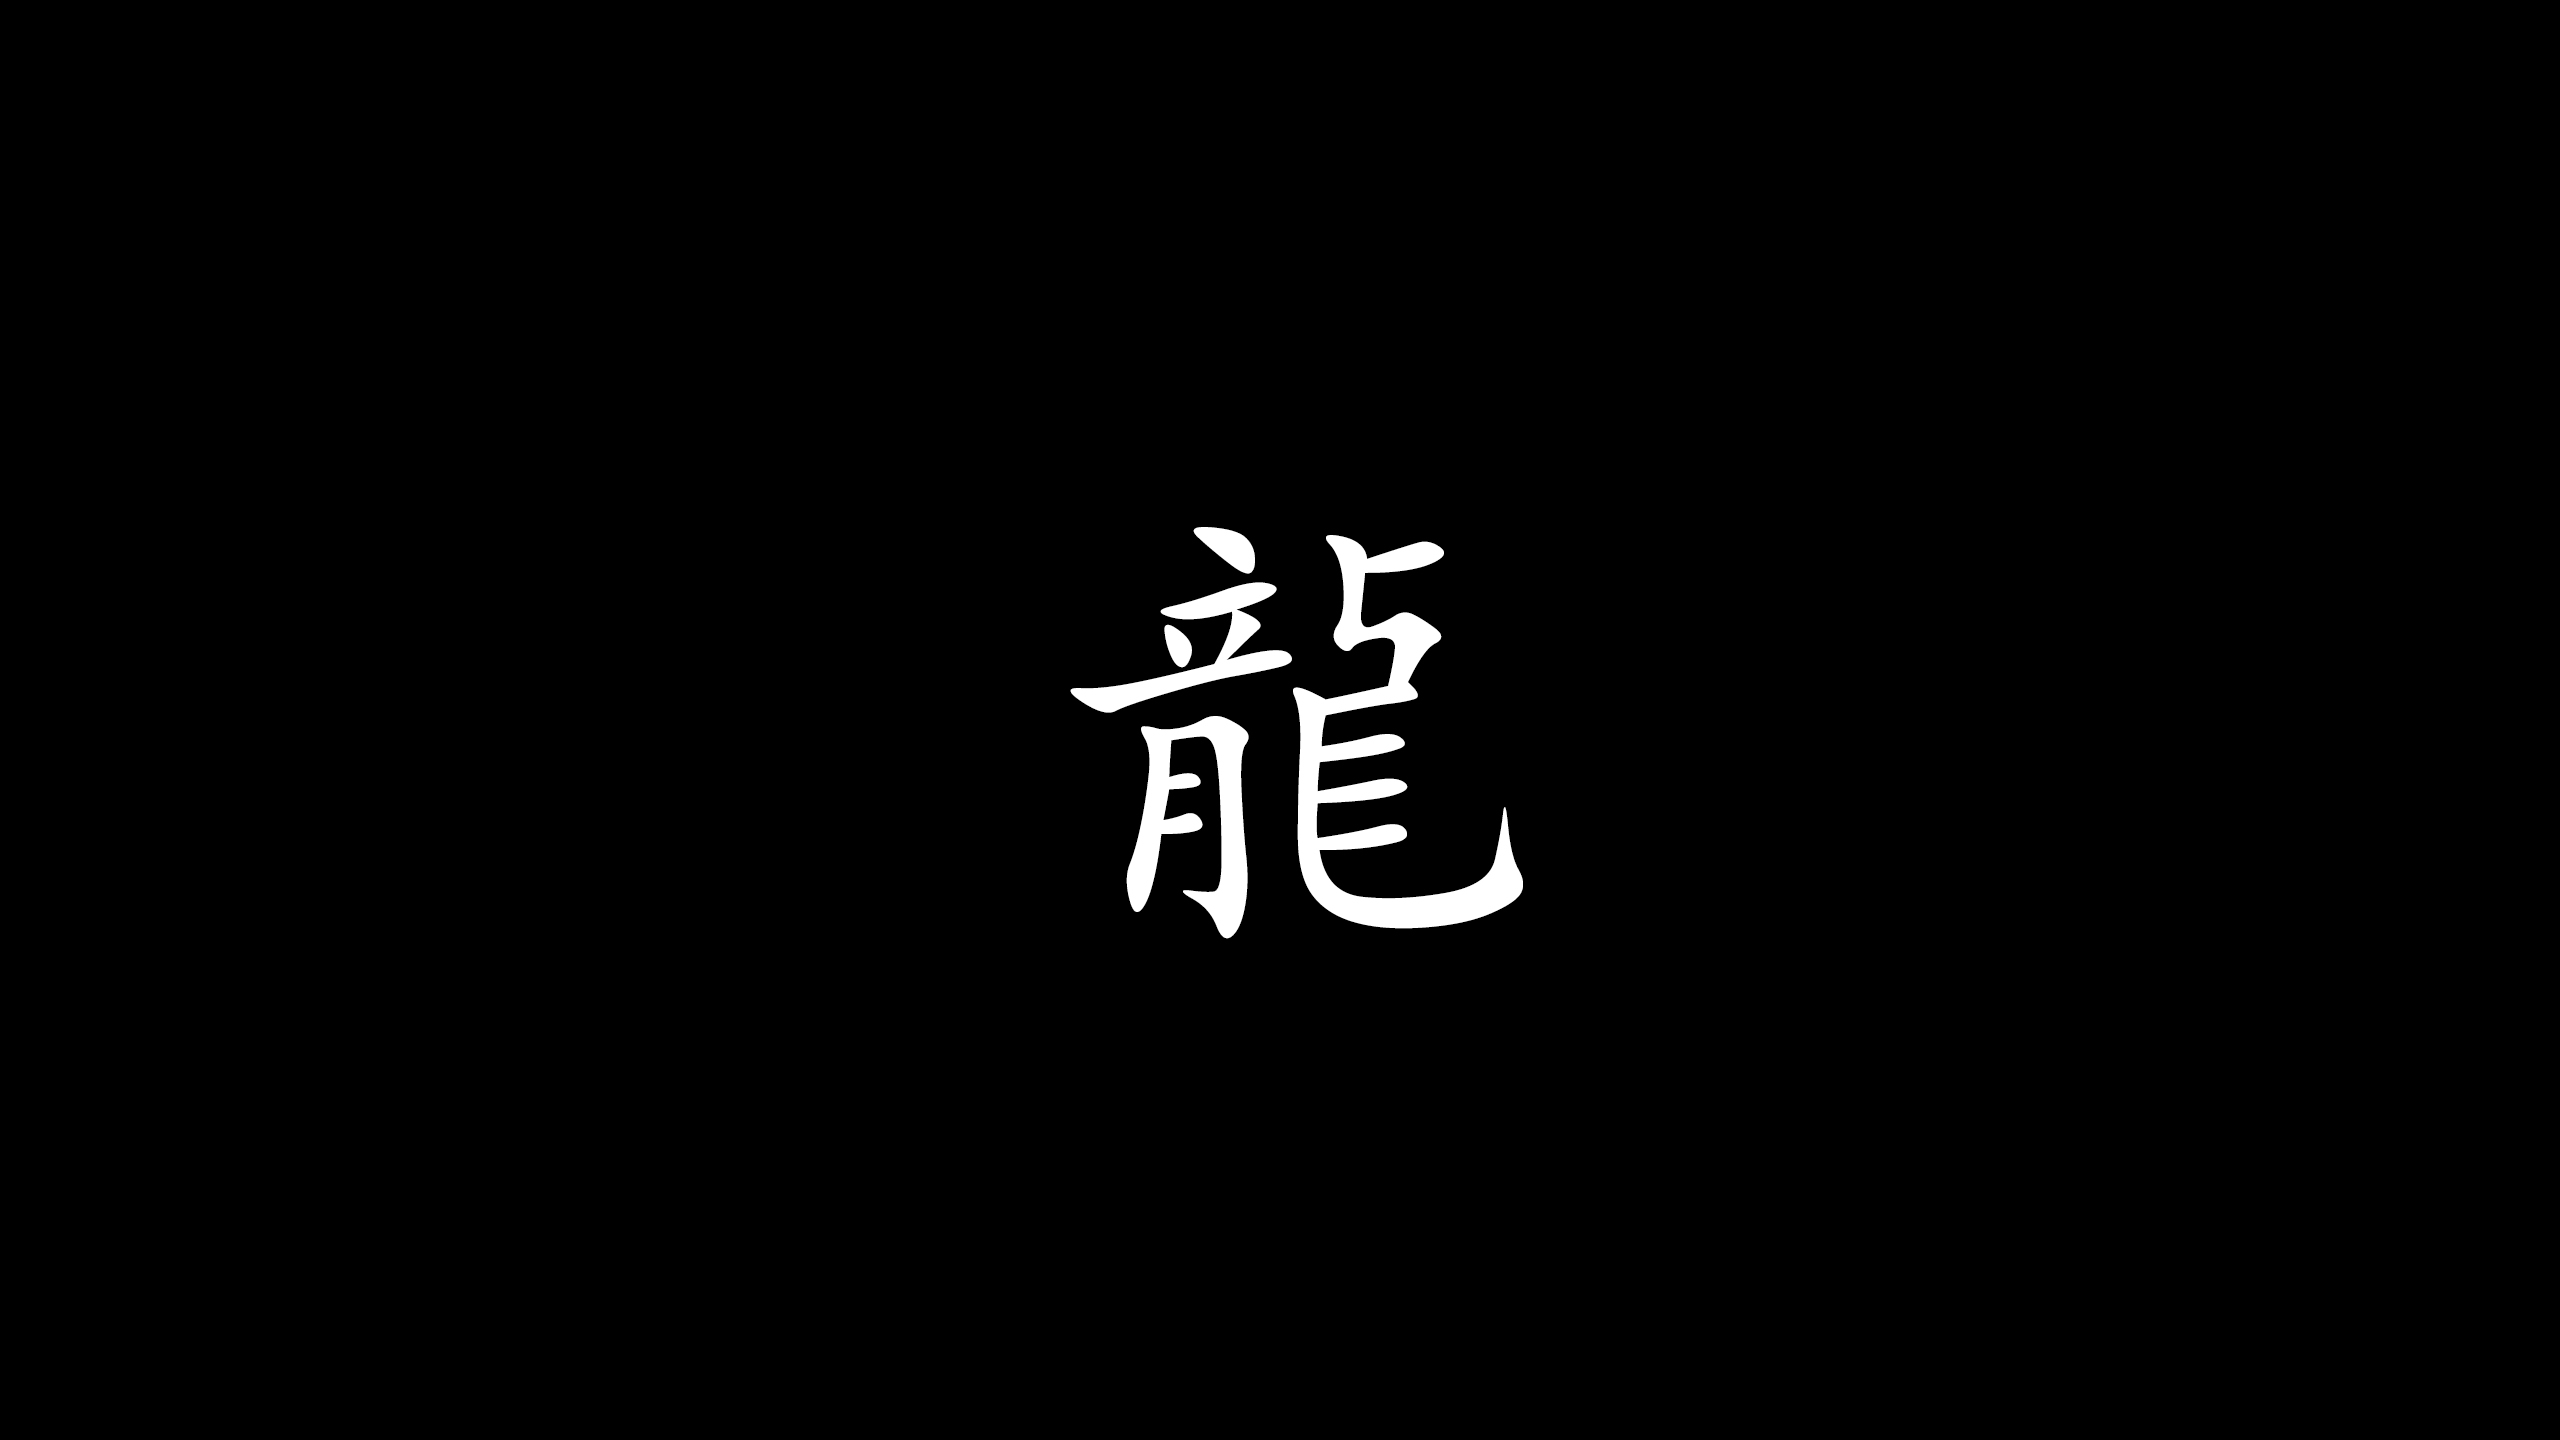 General 2560x1440 kanji black white simple background black background minimalism